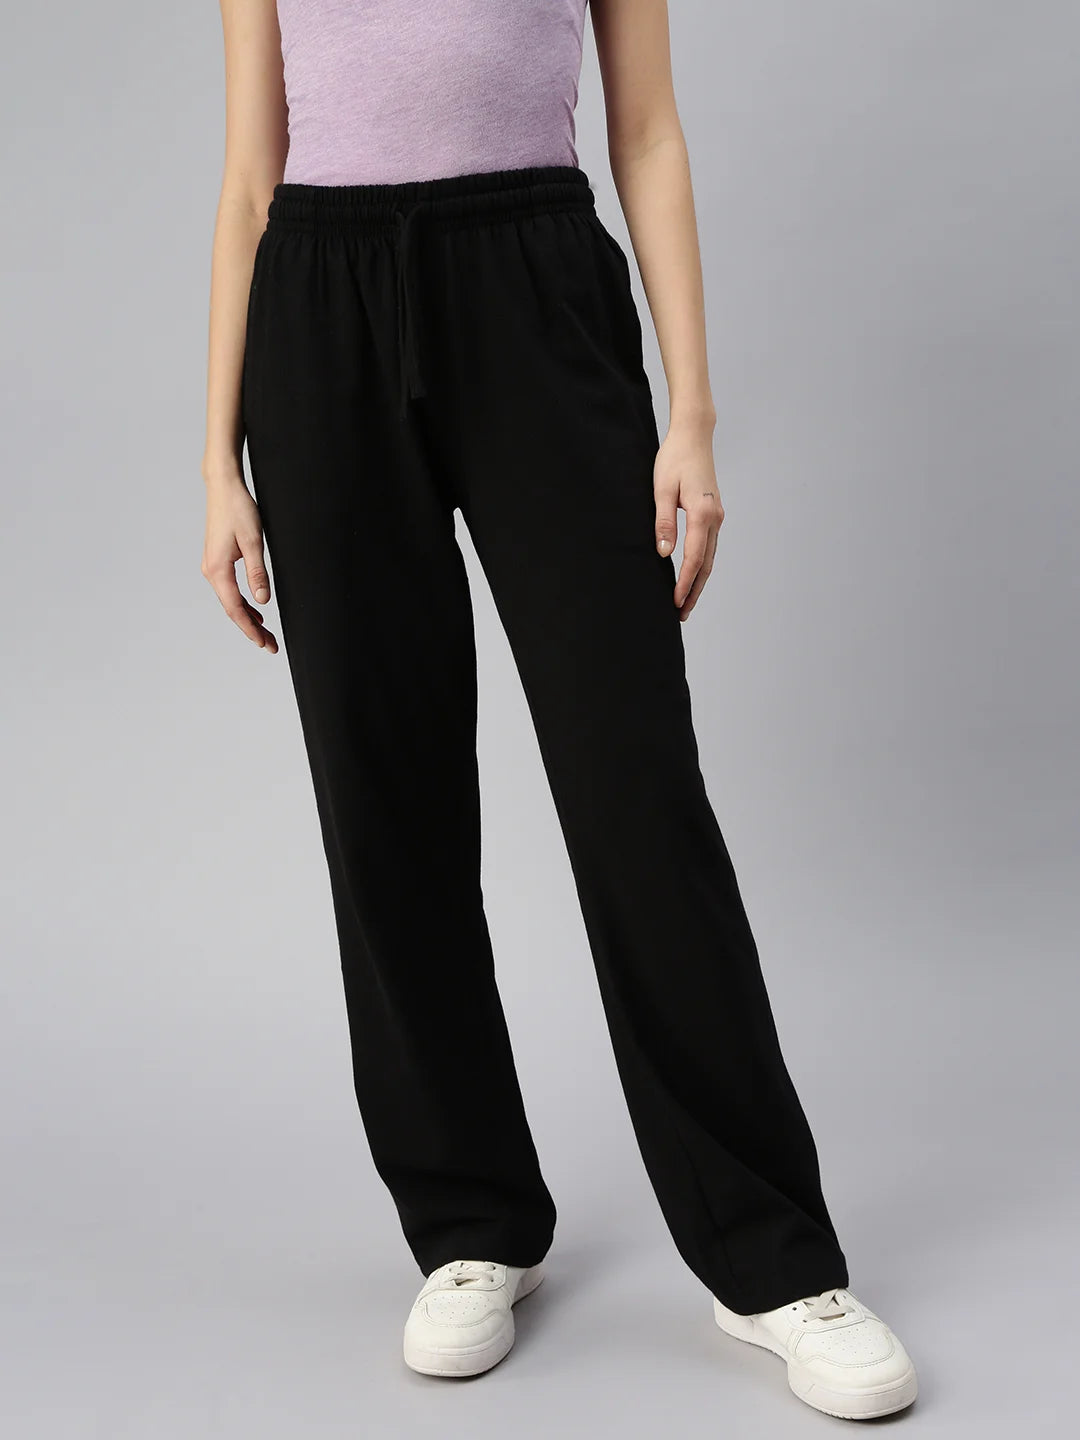 unisex-denver-baumwolle-polyester-sweatpants-noir-front_2